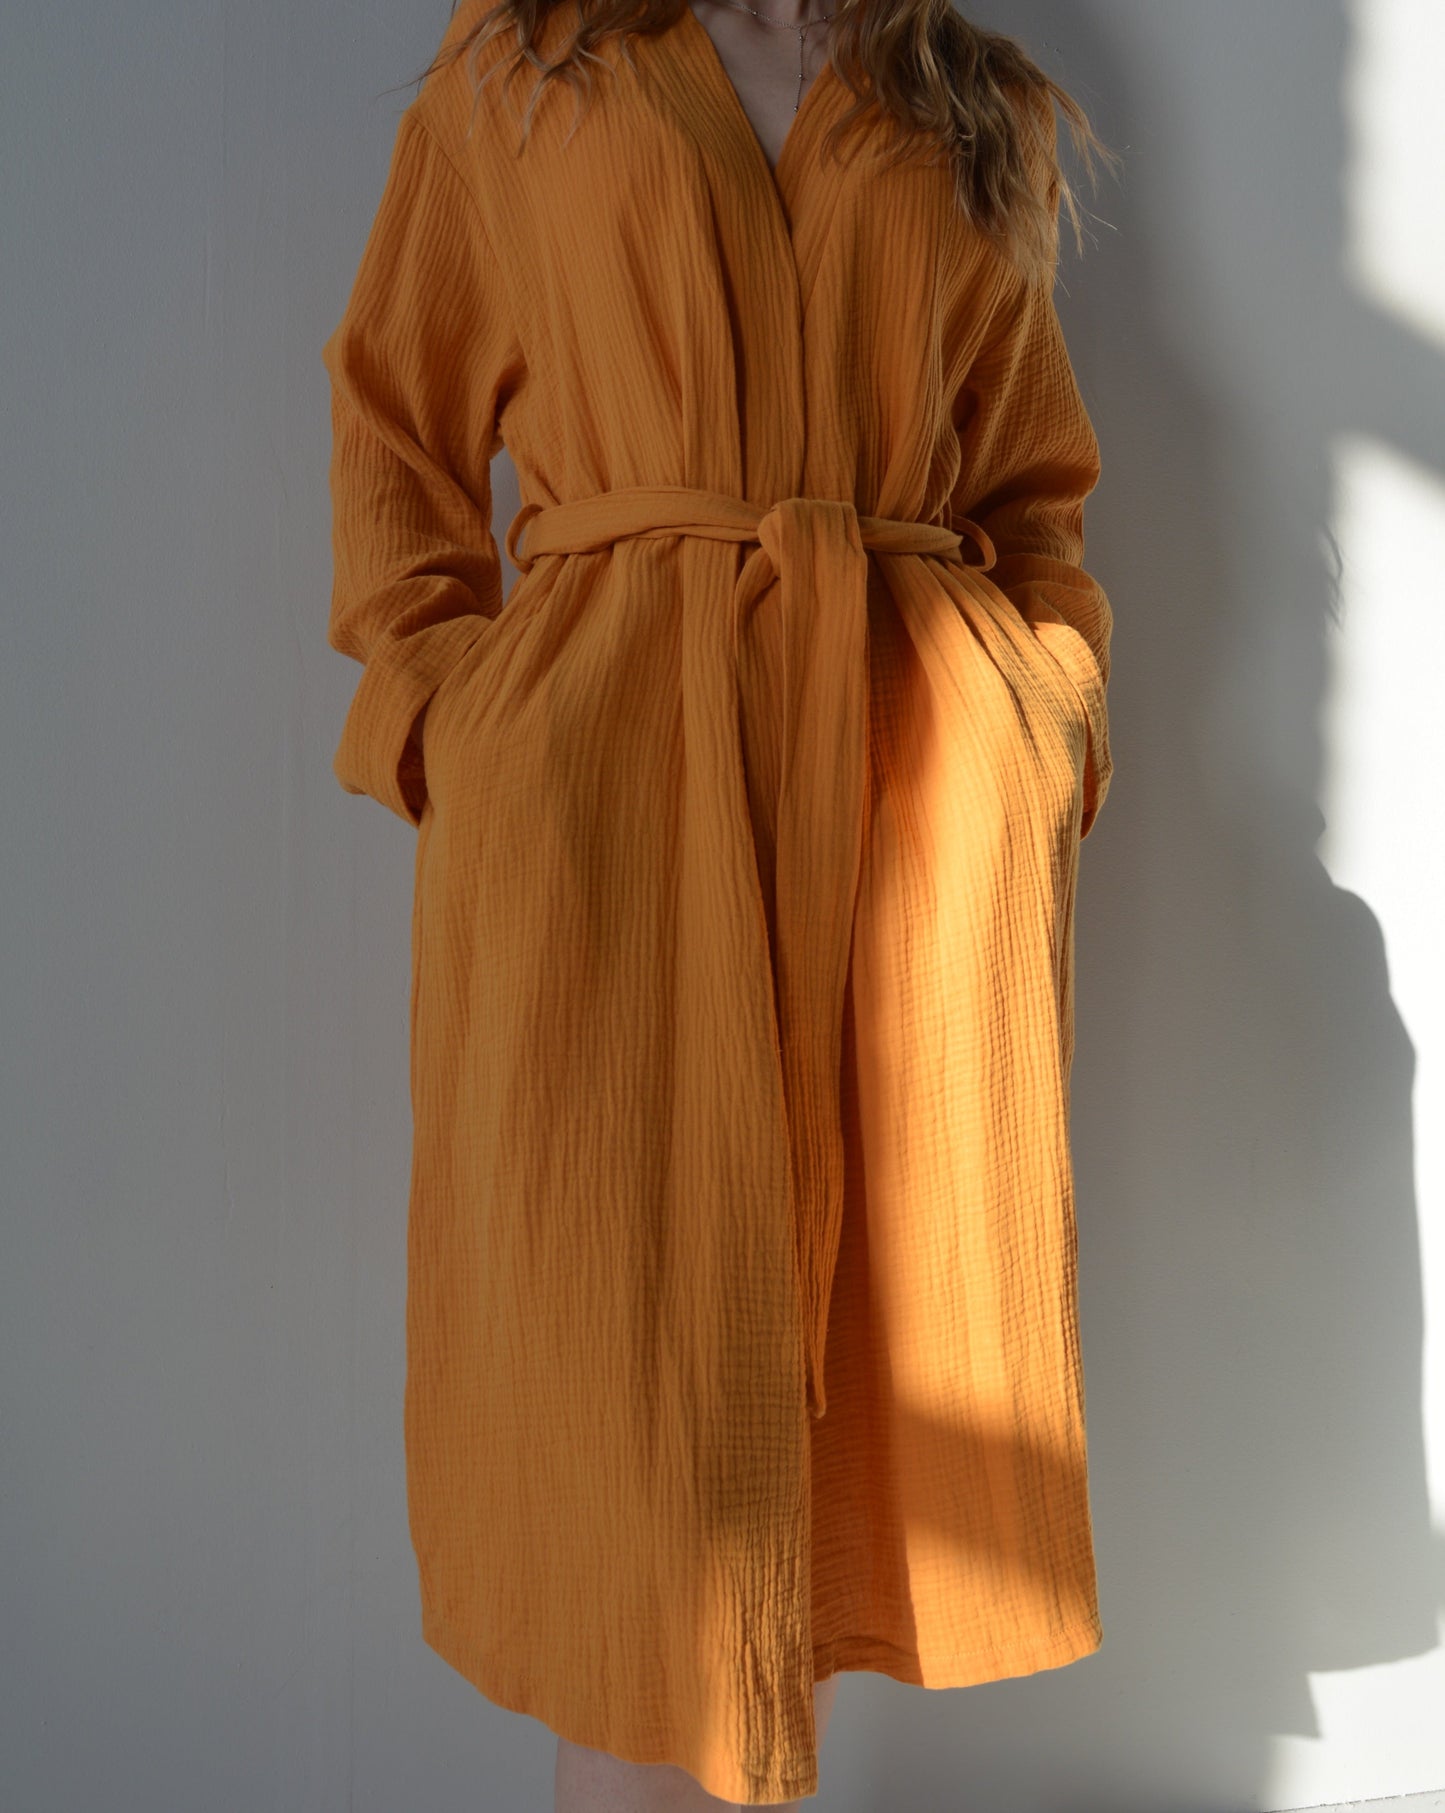 Cotton Muslin Double gauze Robe in Sunrise Glow (orange) color"